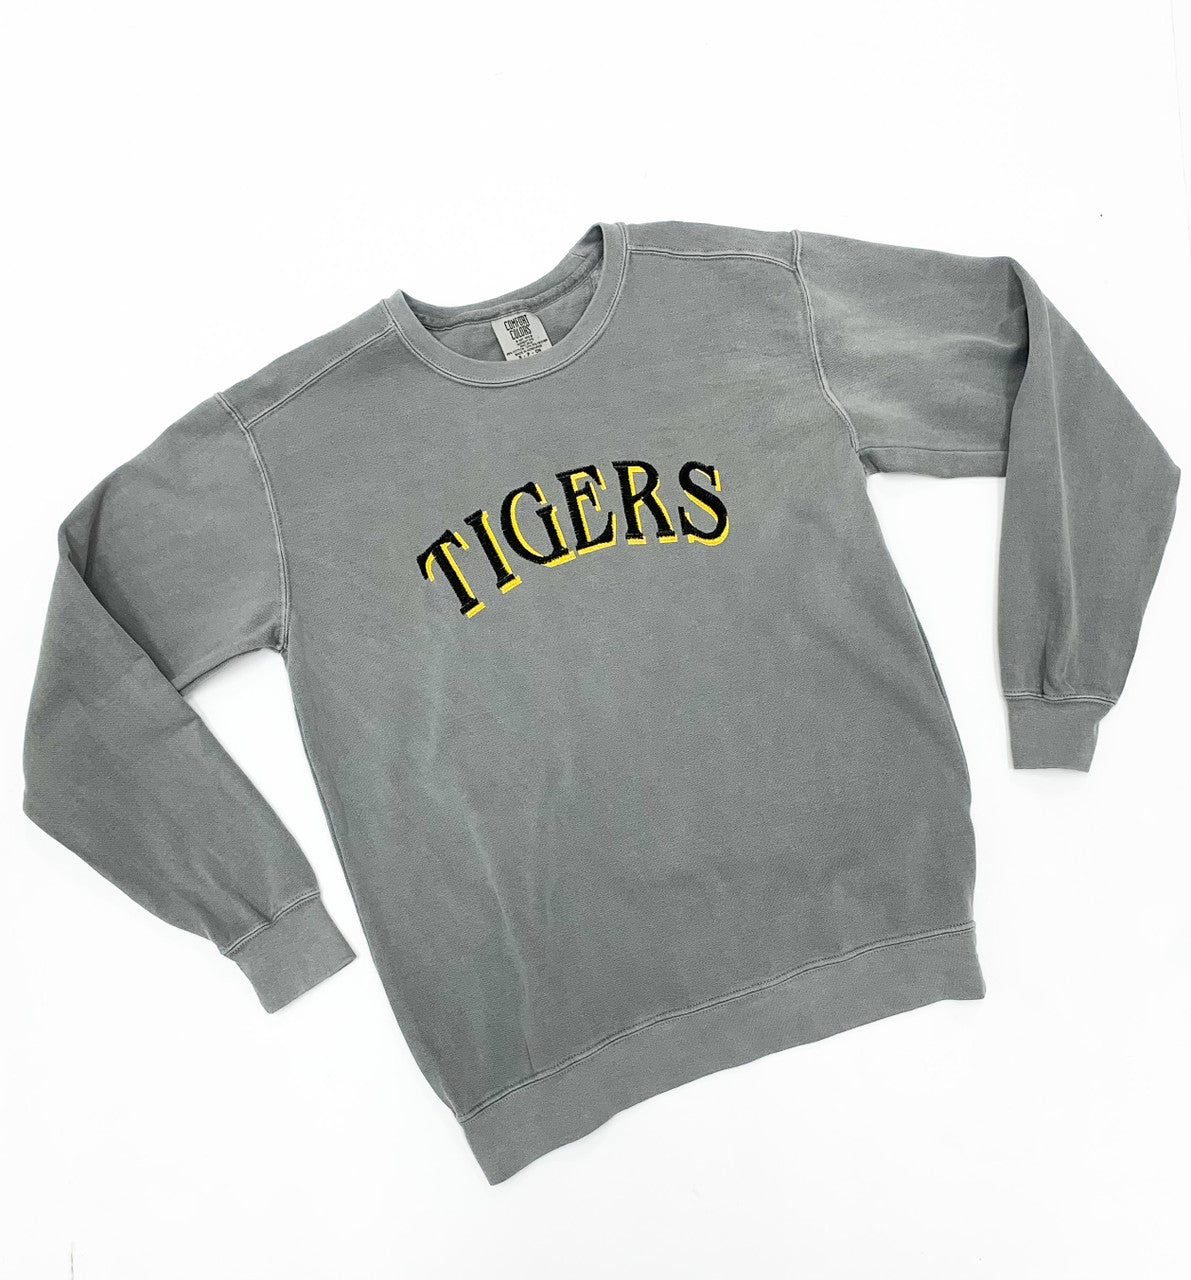 Home Team Tigers Sweatshirt